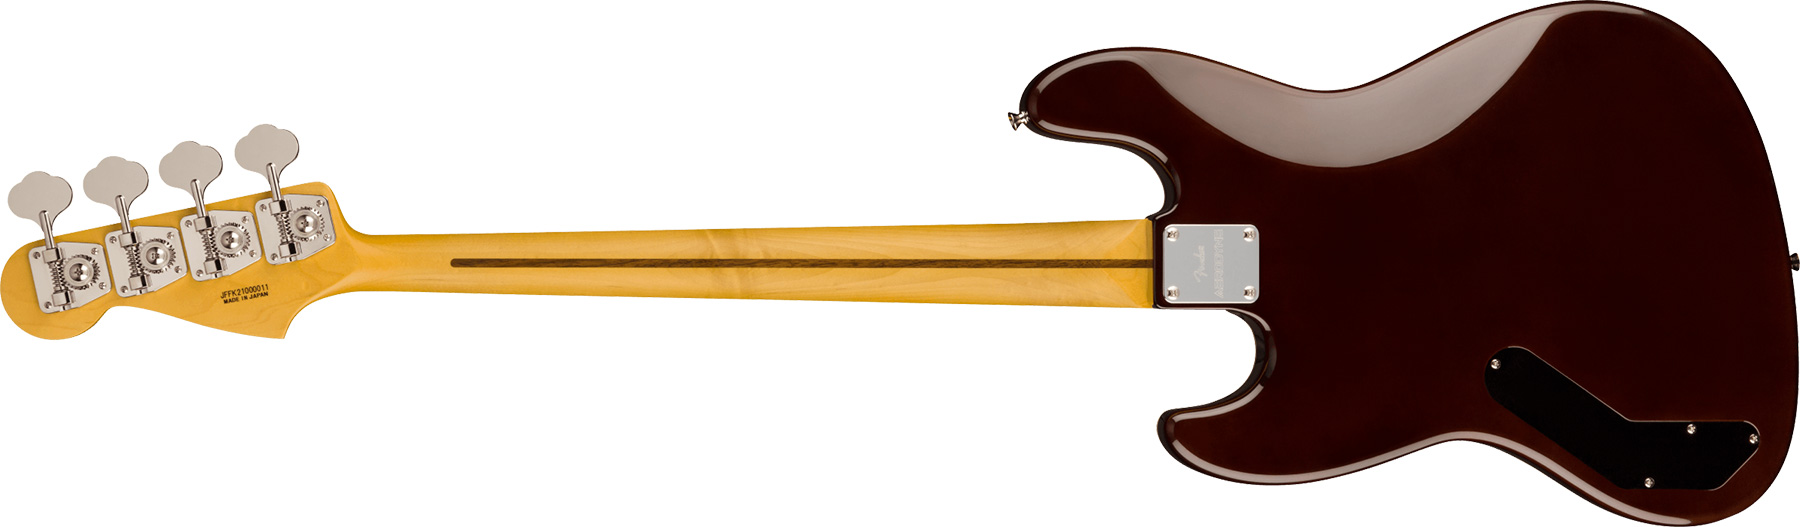 Fender Jazz Bass Aerodyne Special Jap Rw - Chocolate Burst - Basse Électrique Solid Body - Variation 1